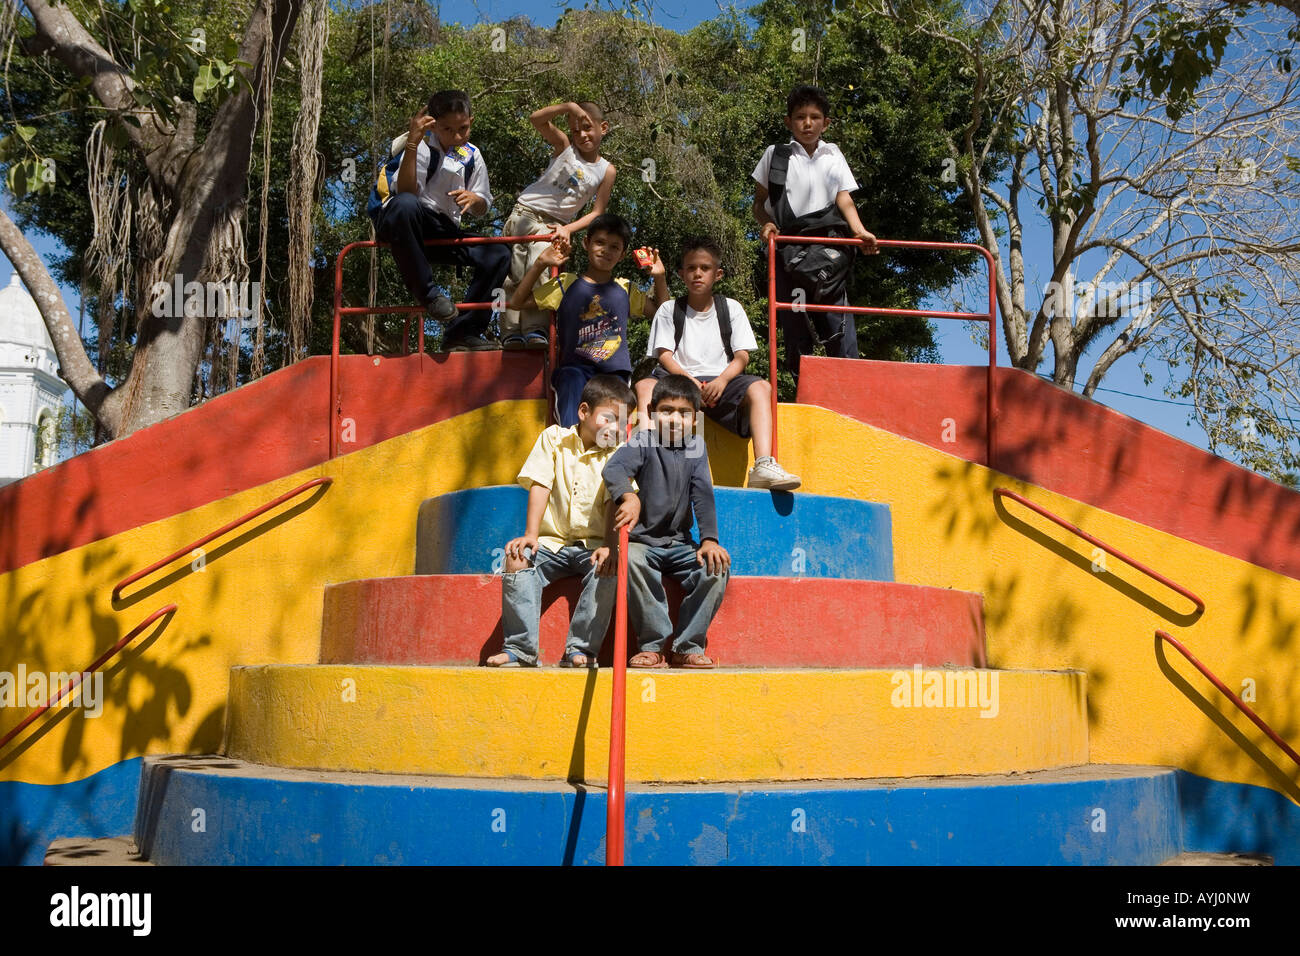 Boys playing on painted slide Masatepe Pueblos Blancos White Villages Nicaragua Stock Photo